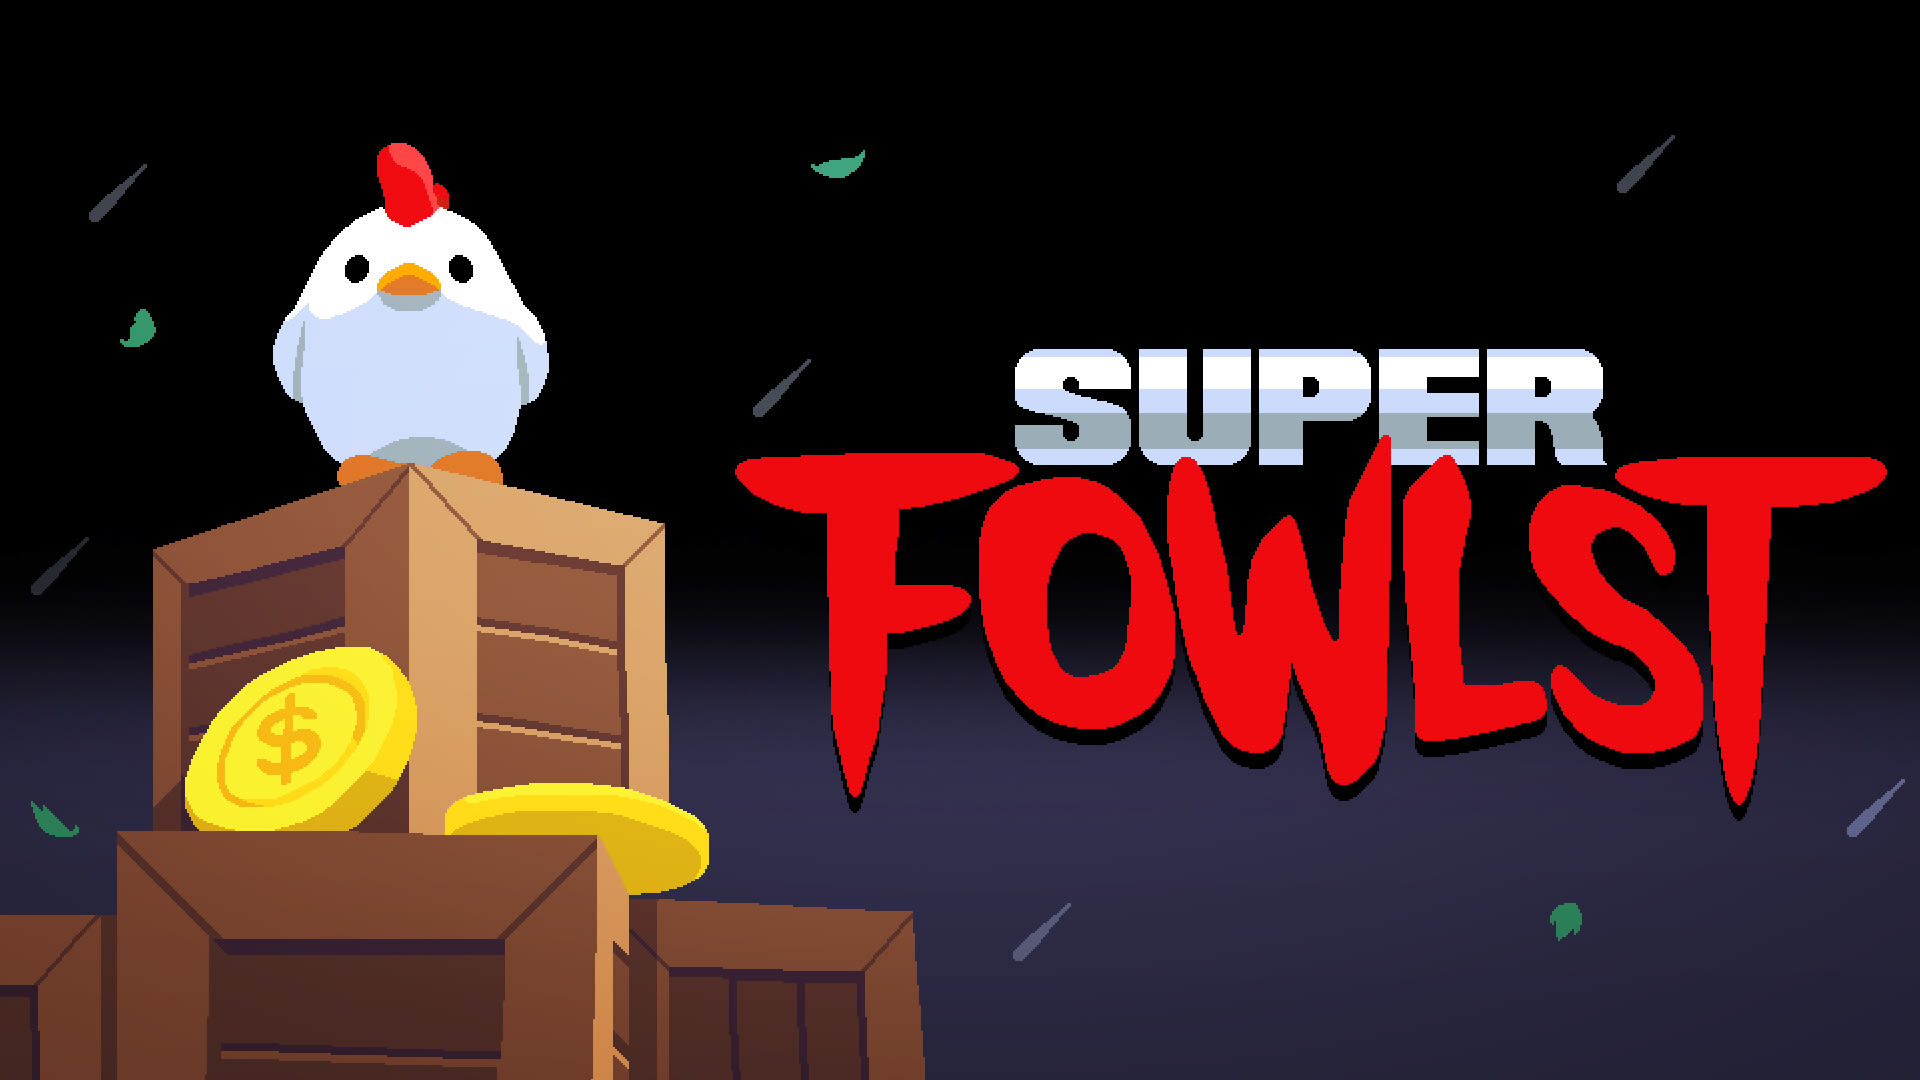 Super Fowlst 1